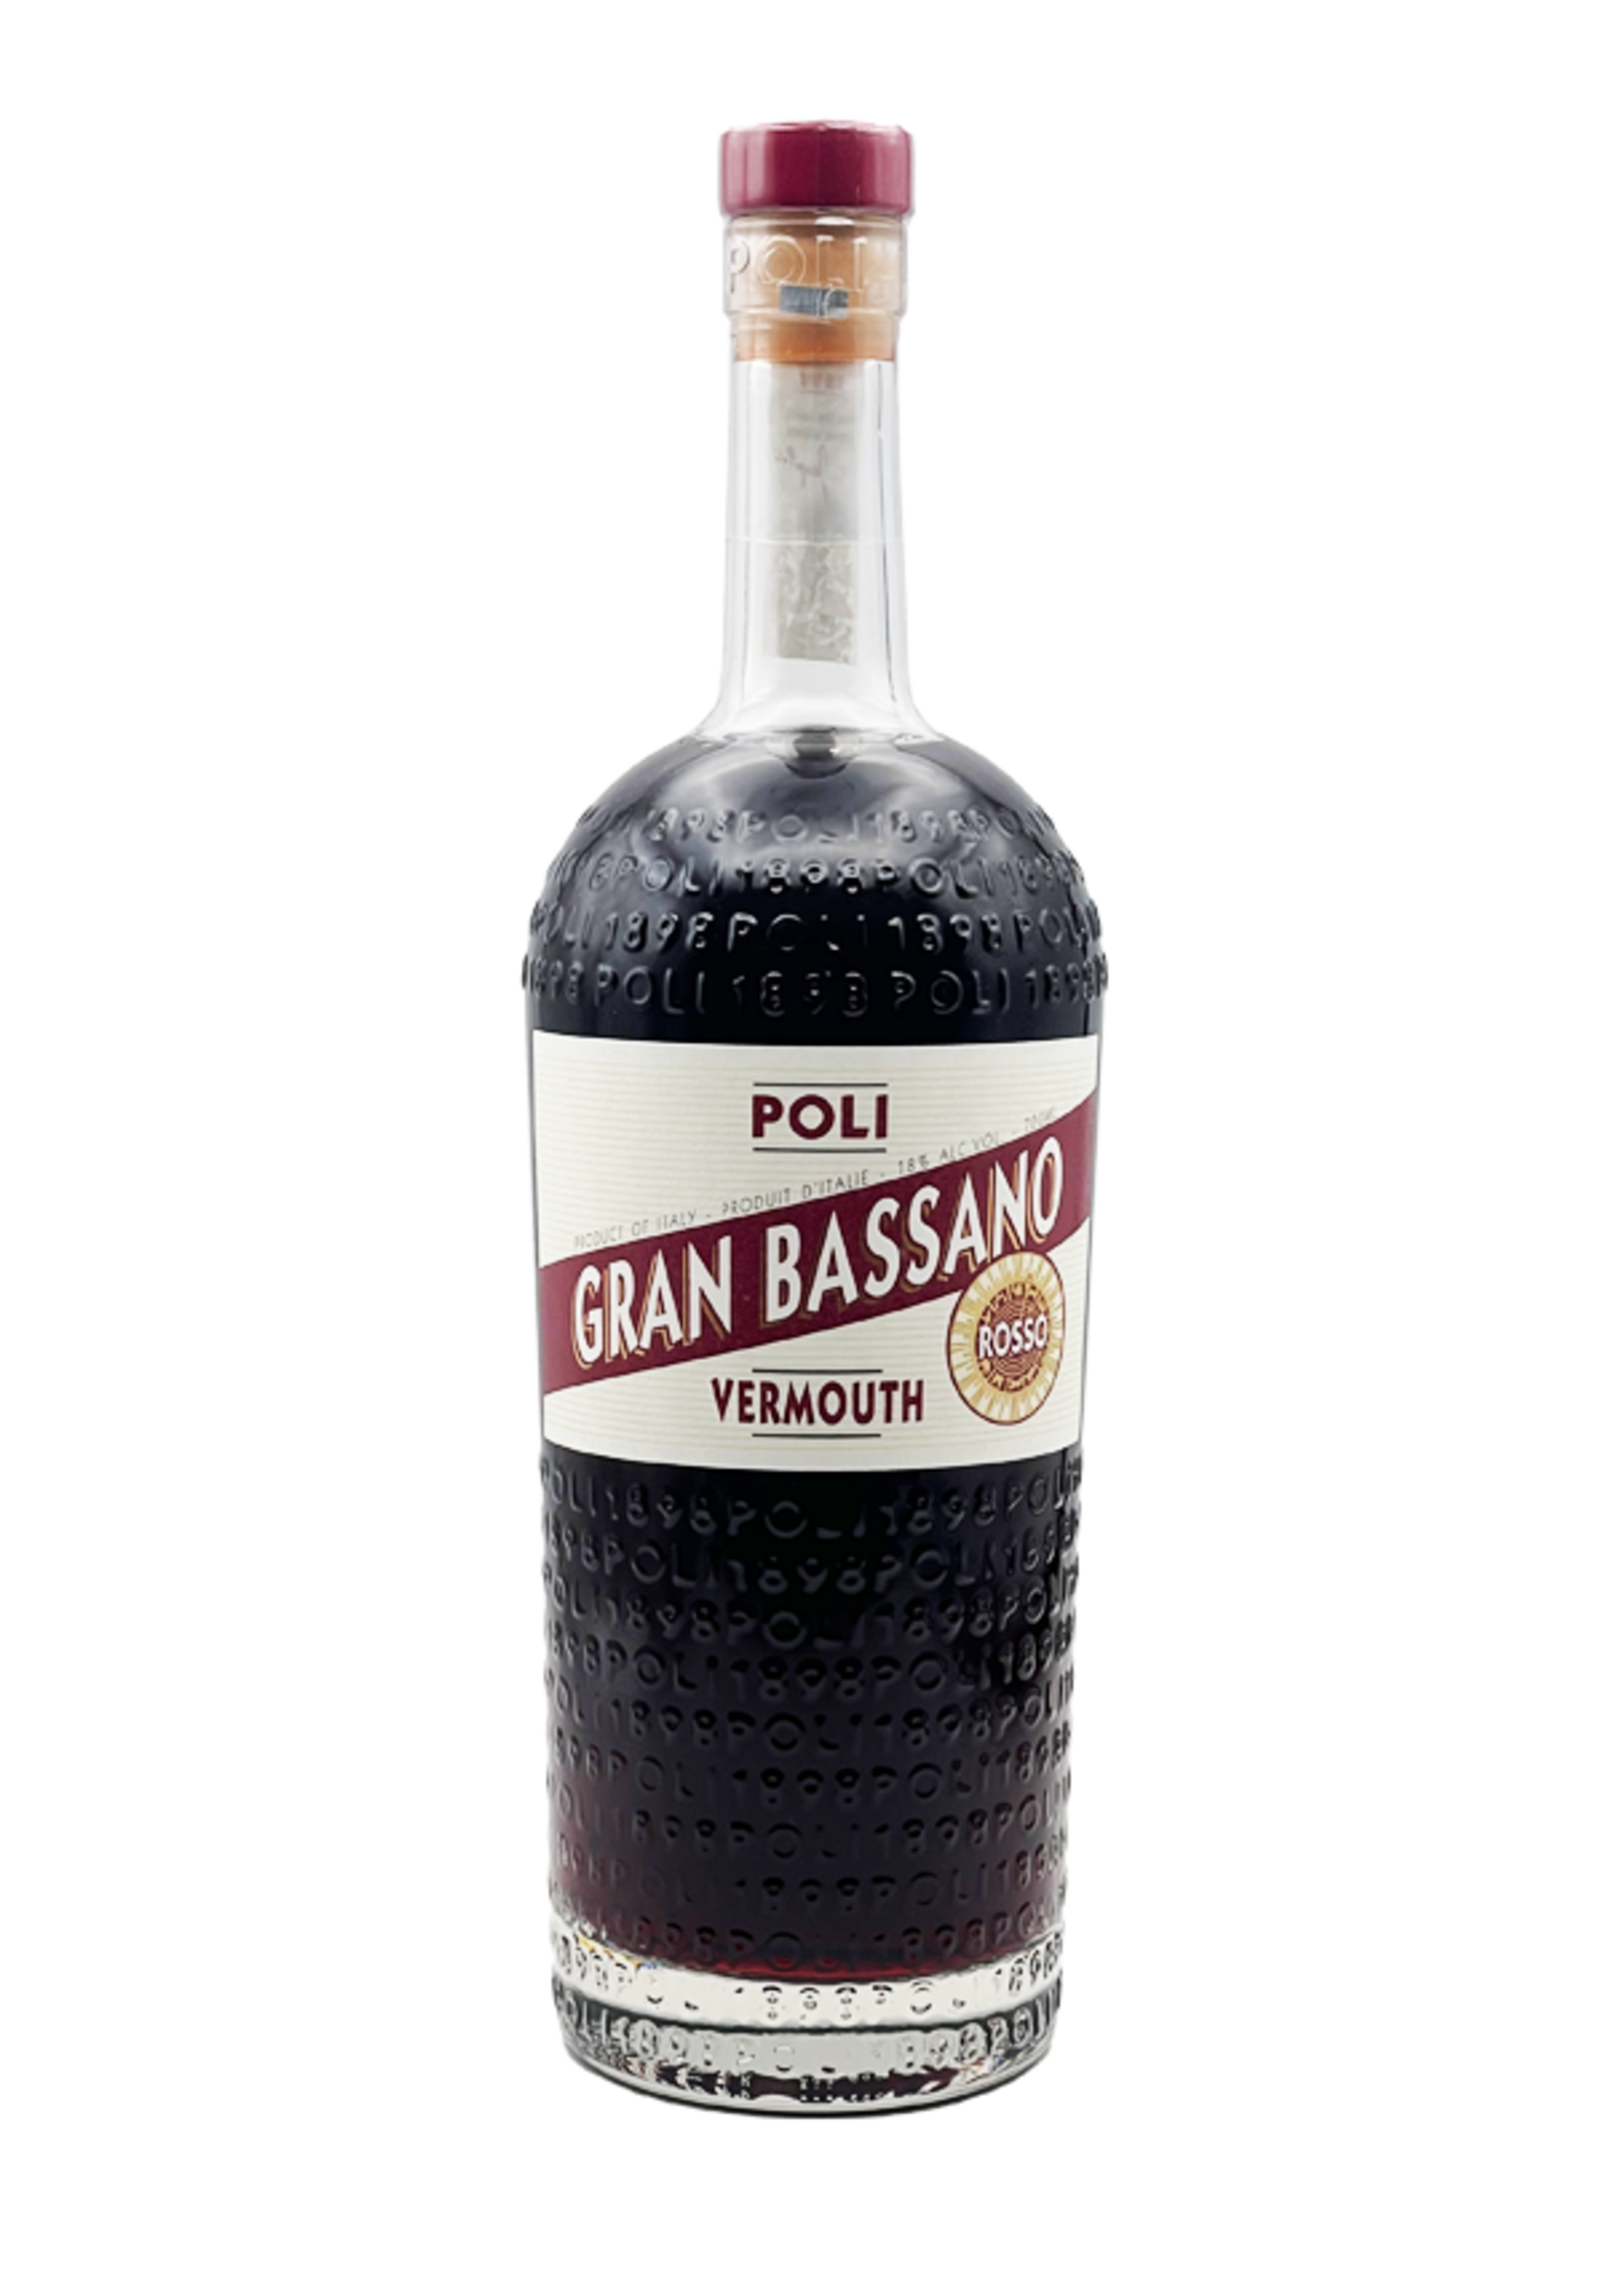 Poli Vermouth Rosso Gran Bassano NV Poli